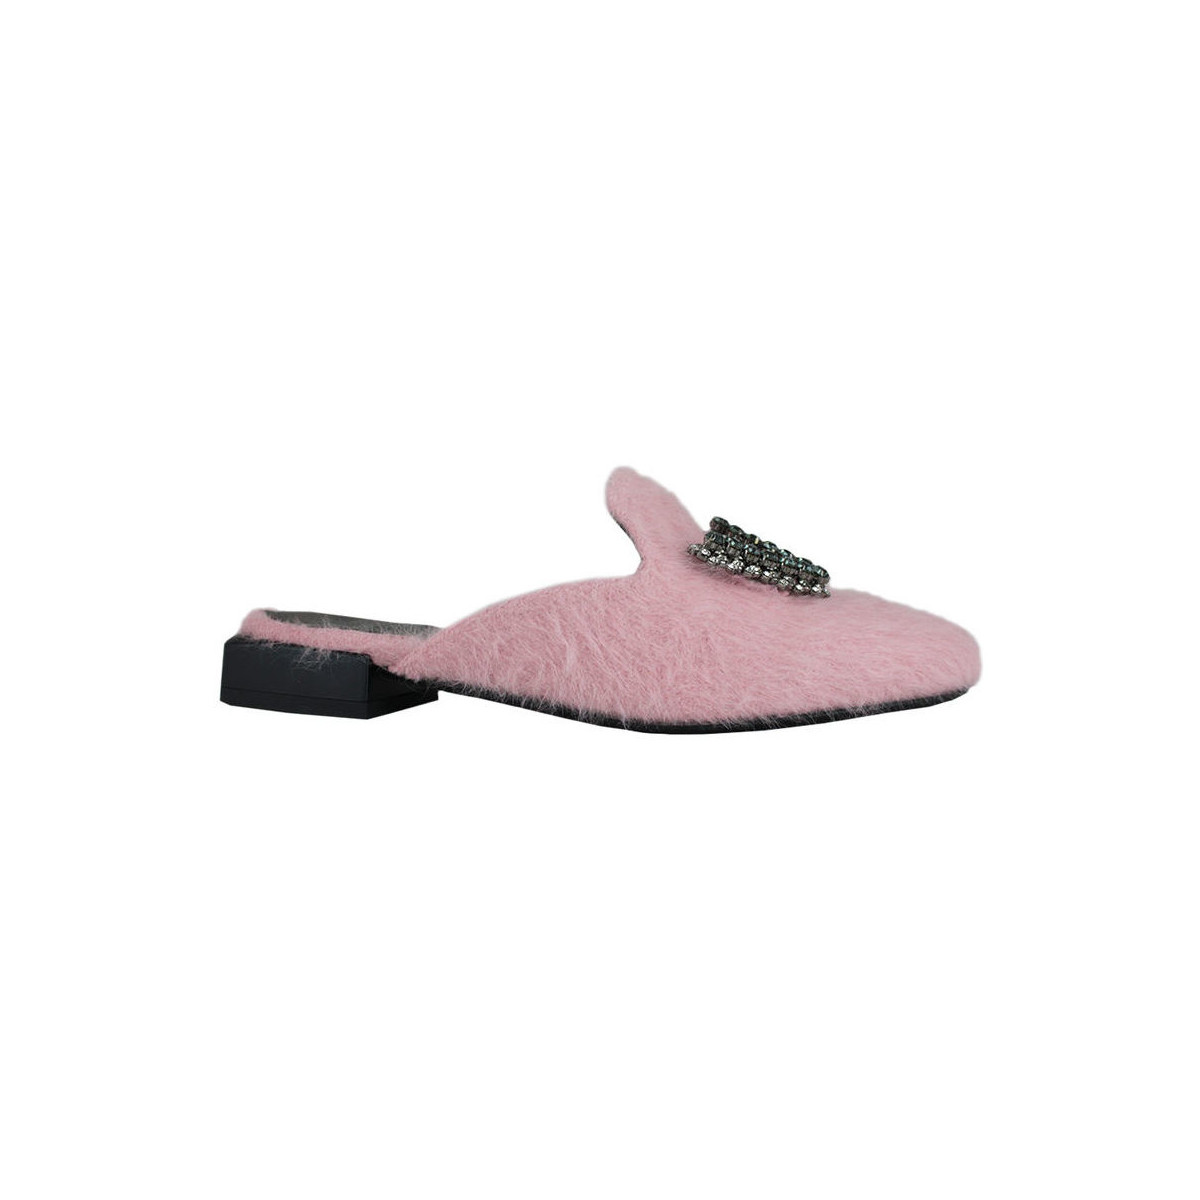 Schuhe Damen Sneaker Thewhitebrand Loafer wb pink Rosa